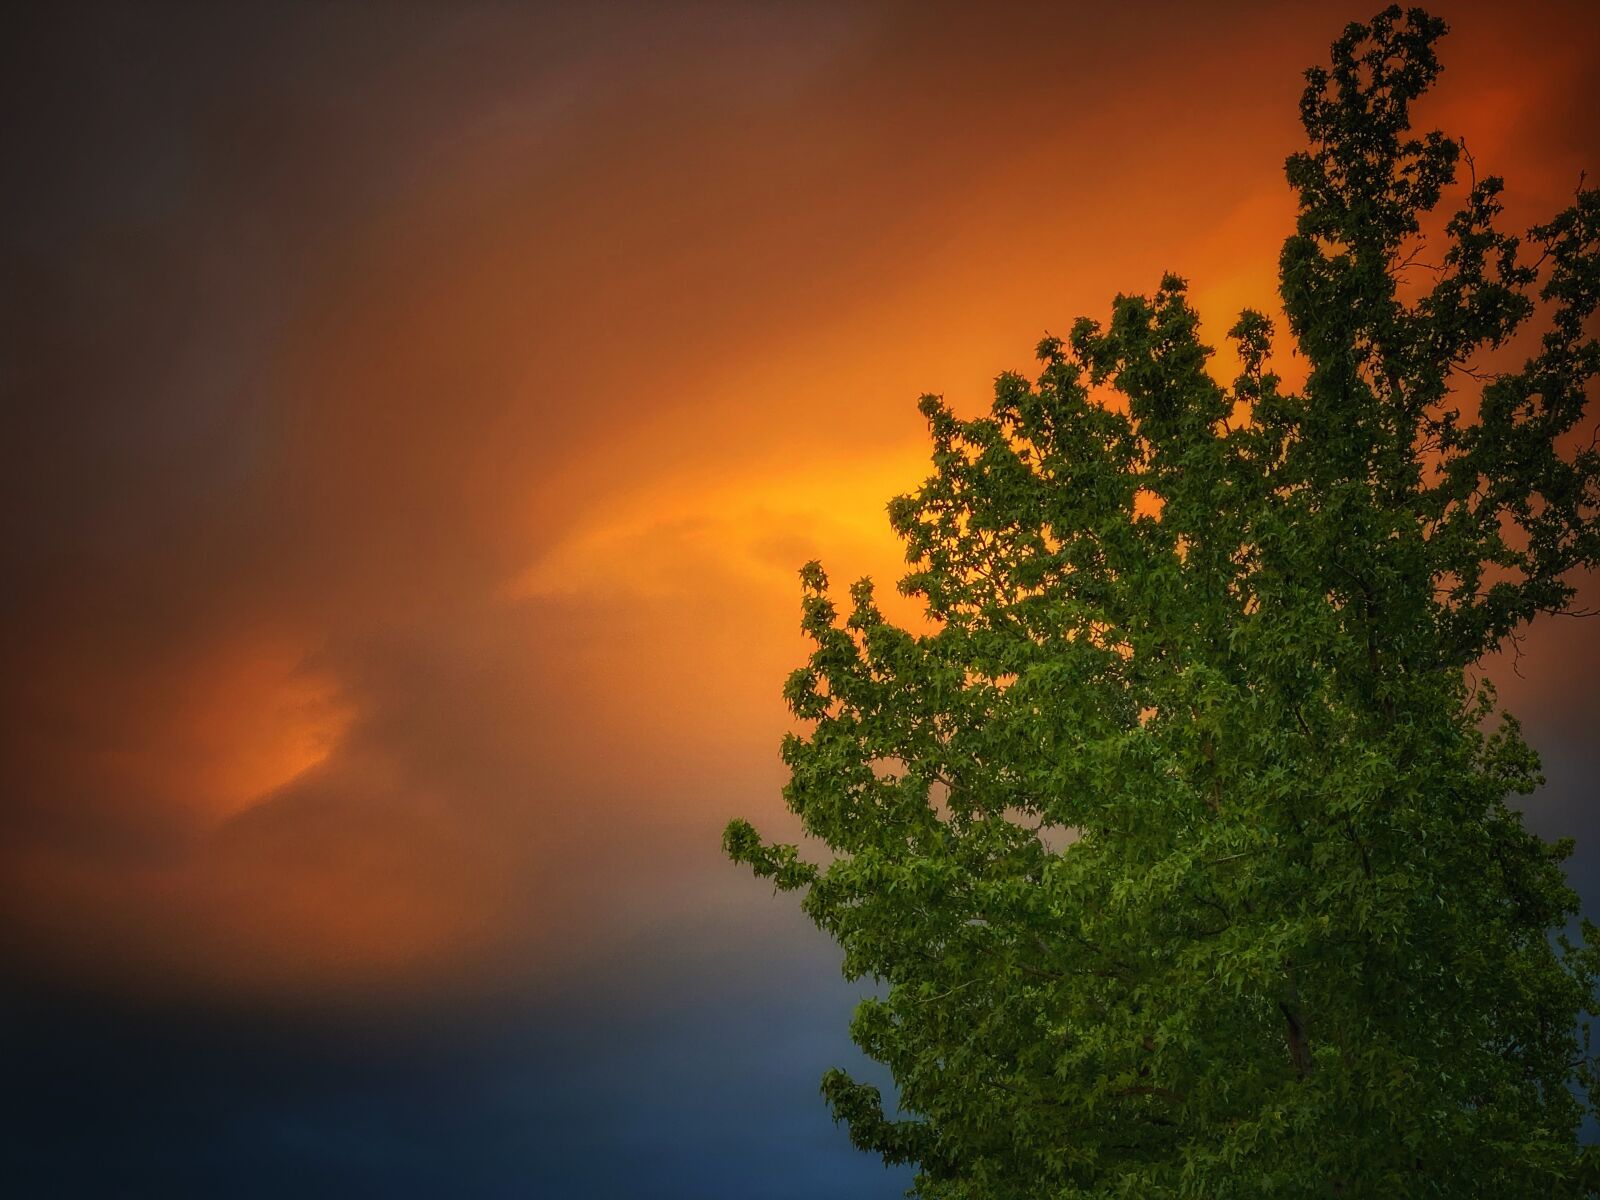 iPhone 11 Pro back triple camera 6mm f/2 sample photo. Evening, sunset, nature photography